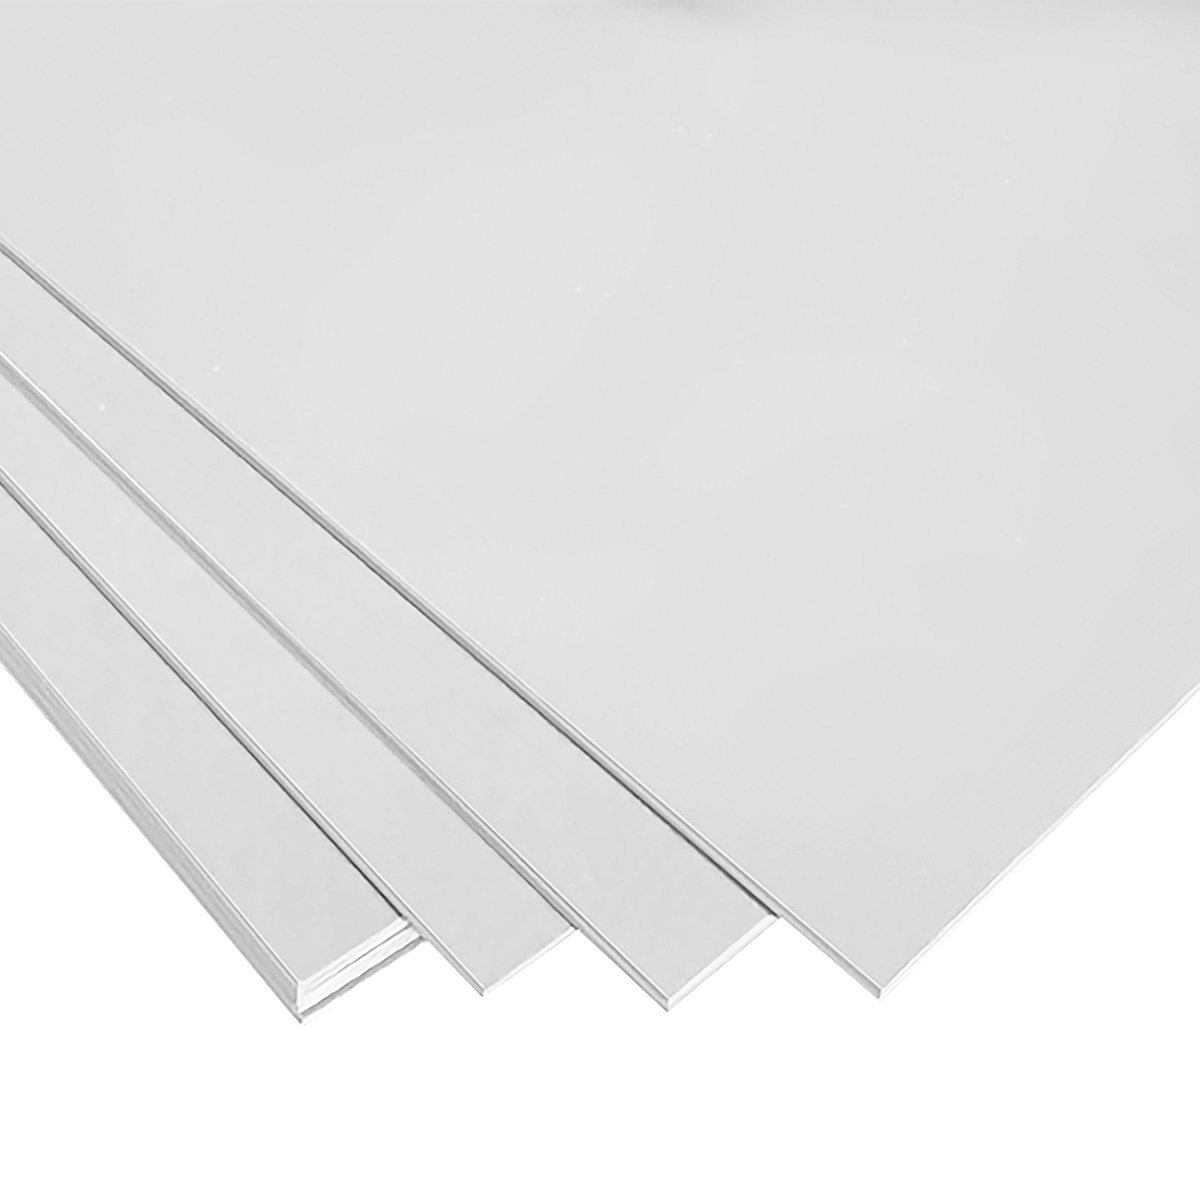  LITKO 8x10-inch Polystyrene Flexible Craft Sheets, Plasticard, Styrene Plastic Sheets, Modeling, Crafting, Scratch Building, Displays